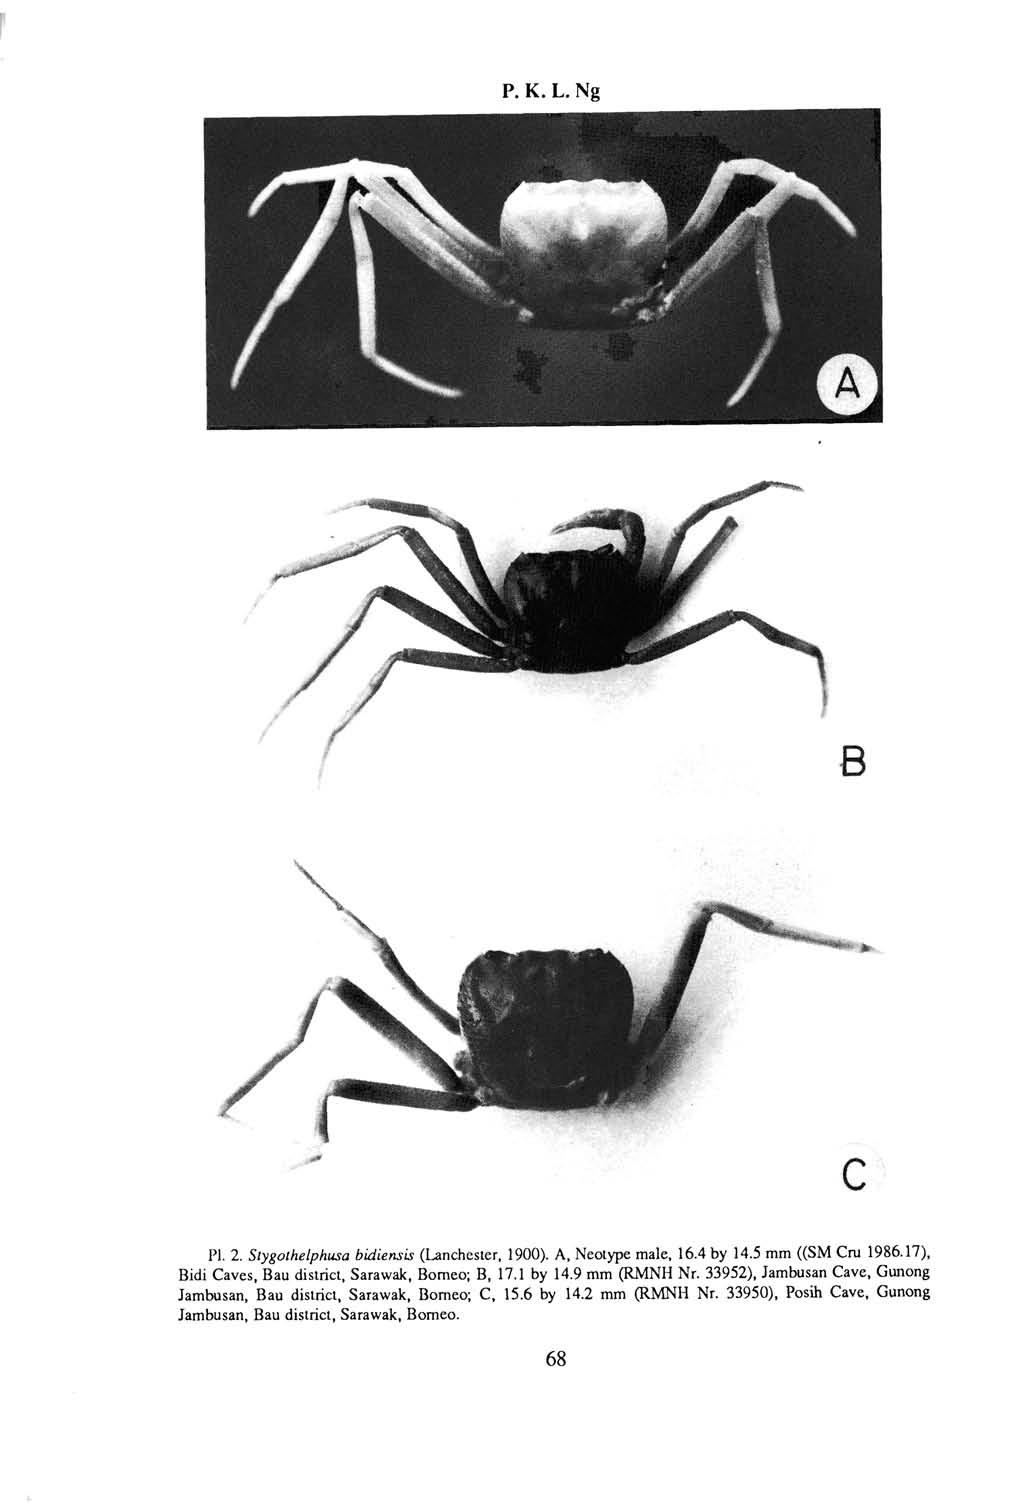 p. K. L. Ng ^ ^'^^^te... /^ PI. 2. Stygothelphusa bidiensis (Lanchesier, 1900). A, Neoiype male, 16.4 by 14.5 mm ((SM Cm 1986.17), Bidi Caves, Bau disirici, Sarawak, Borneo; B, 17.